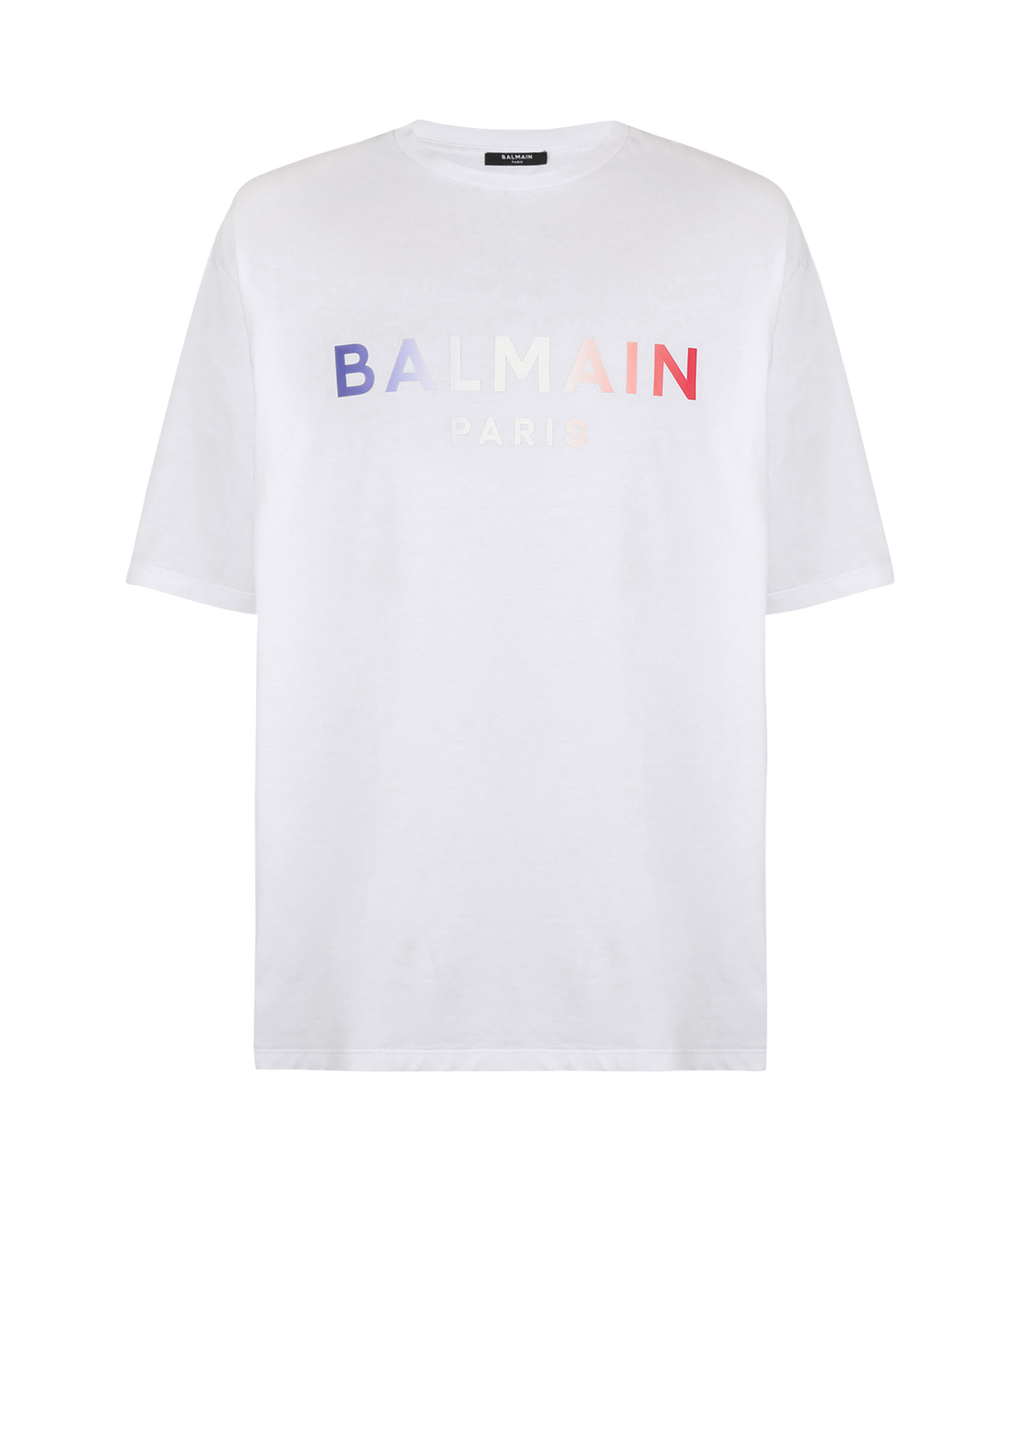 HIGH SUMMER CAPSULE - T-shirt en coton imprimé tie and dye logo Balmain Paris, blanc, hi-res